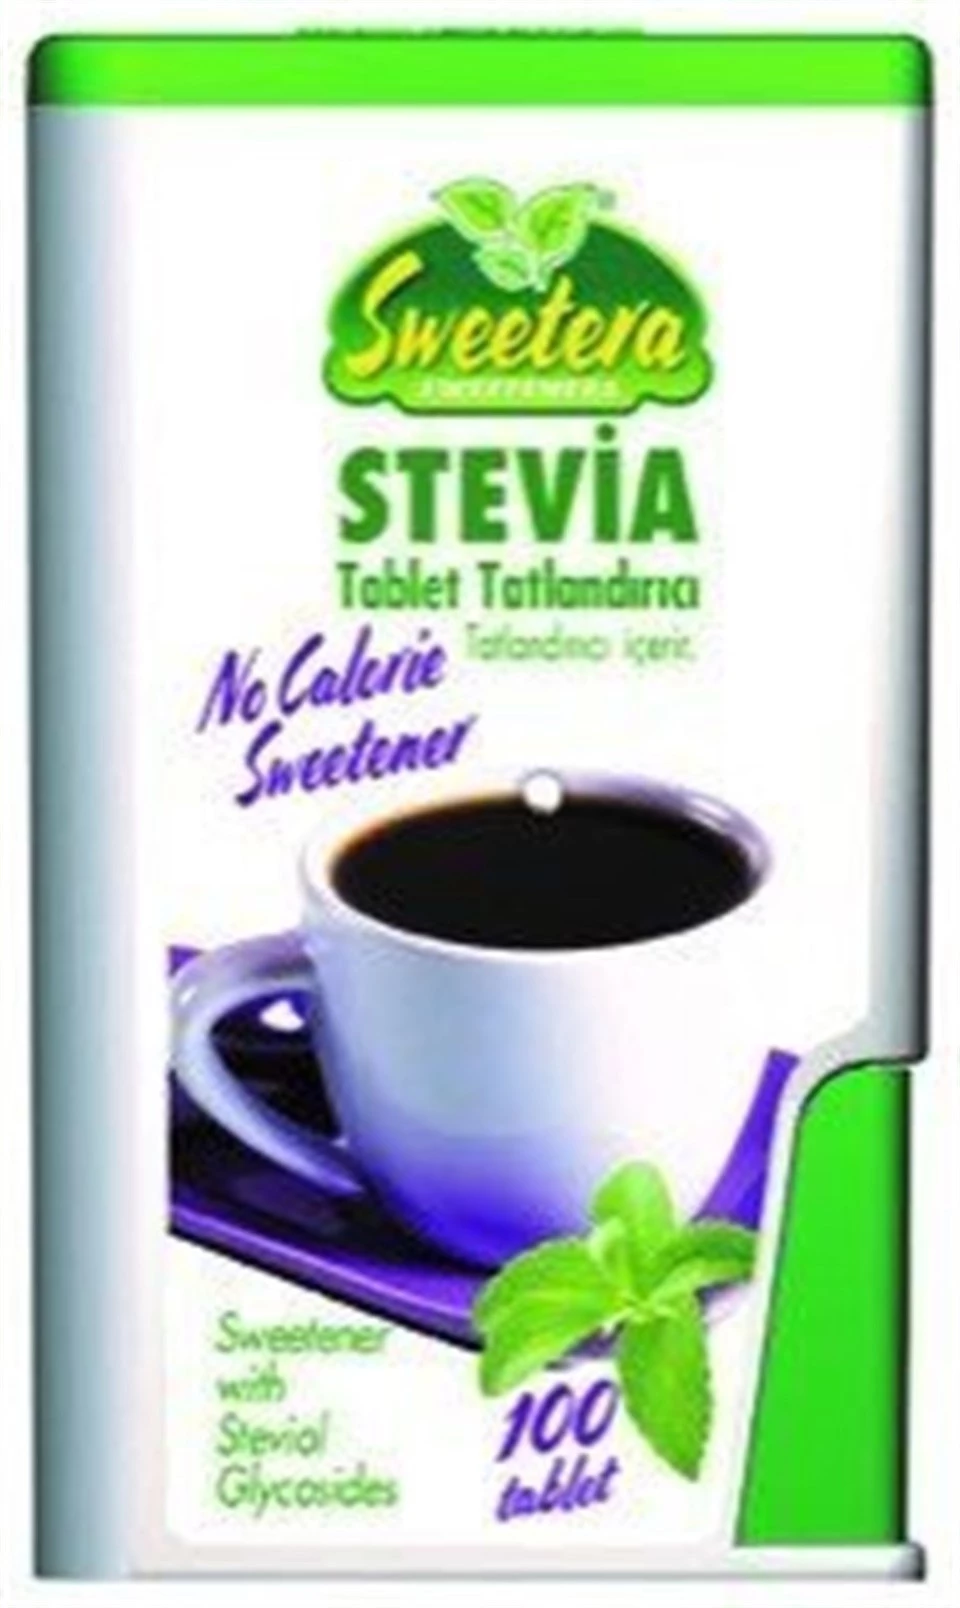 Sweetera Stevia Tatlandirici 100 Tb